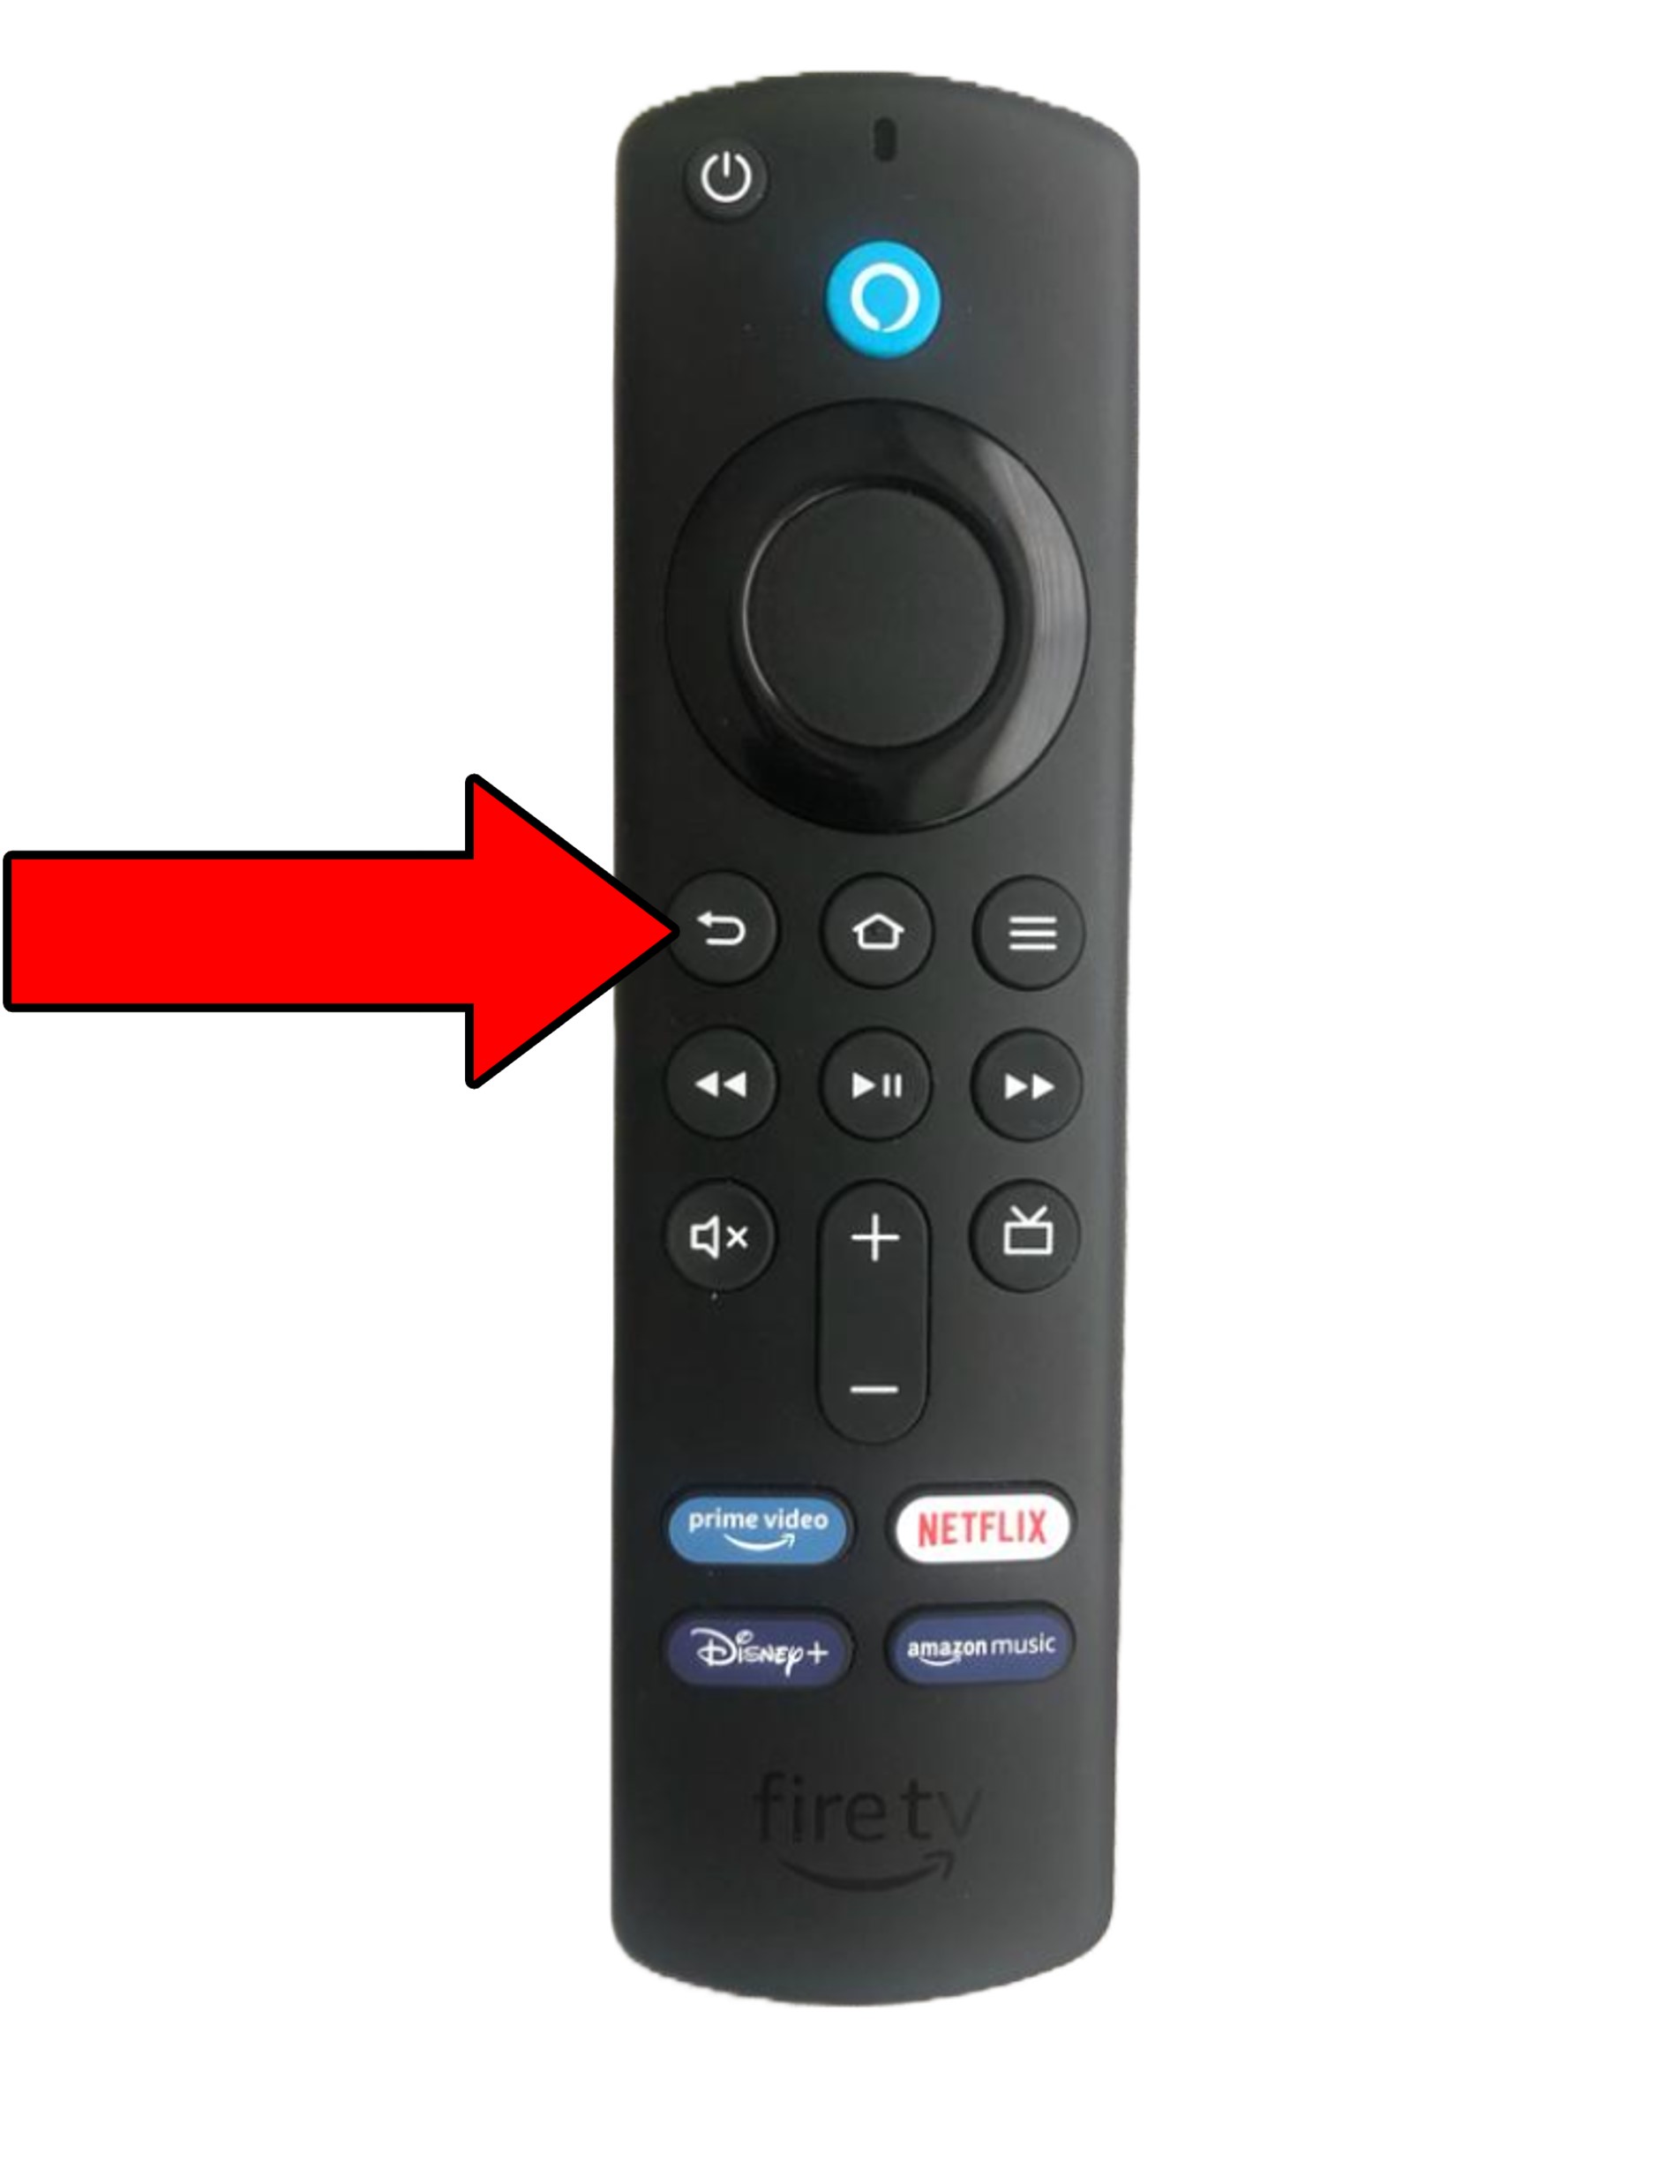 Back button on Amazon Firestick controller